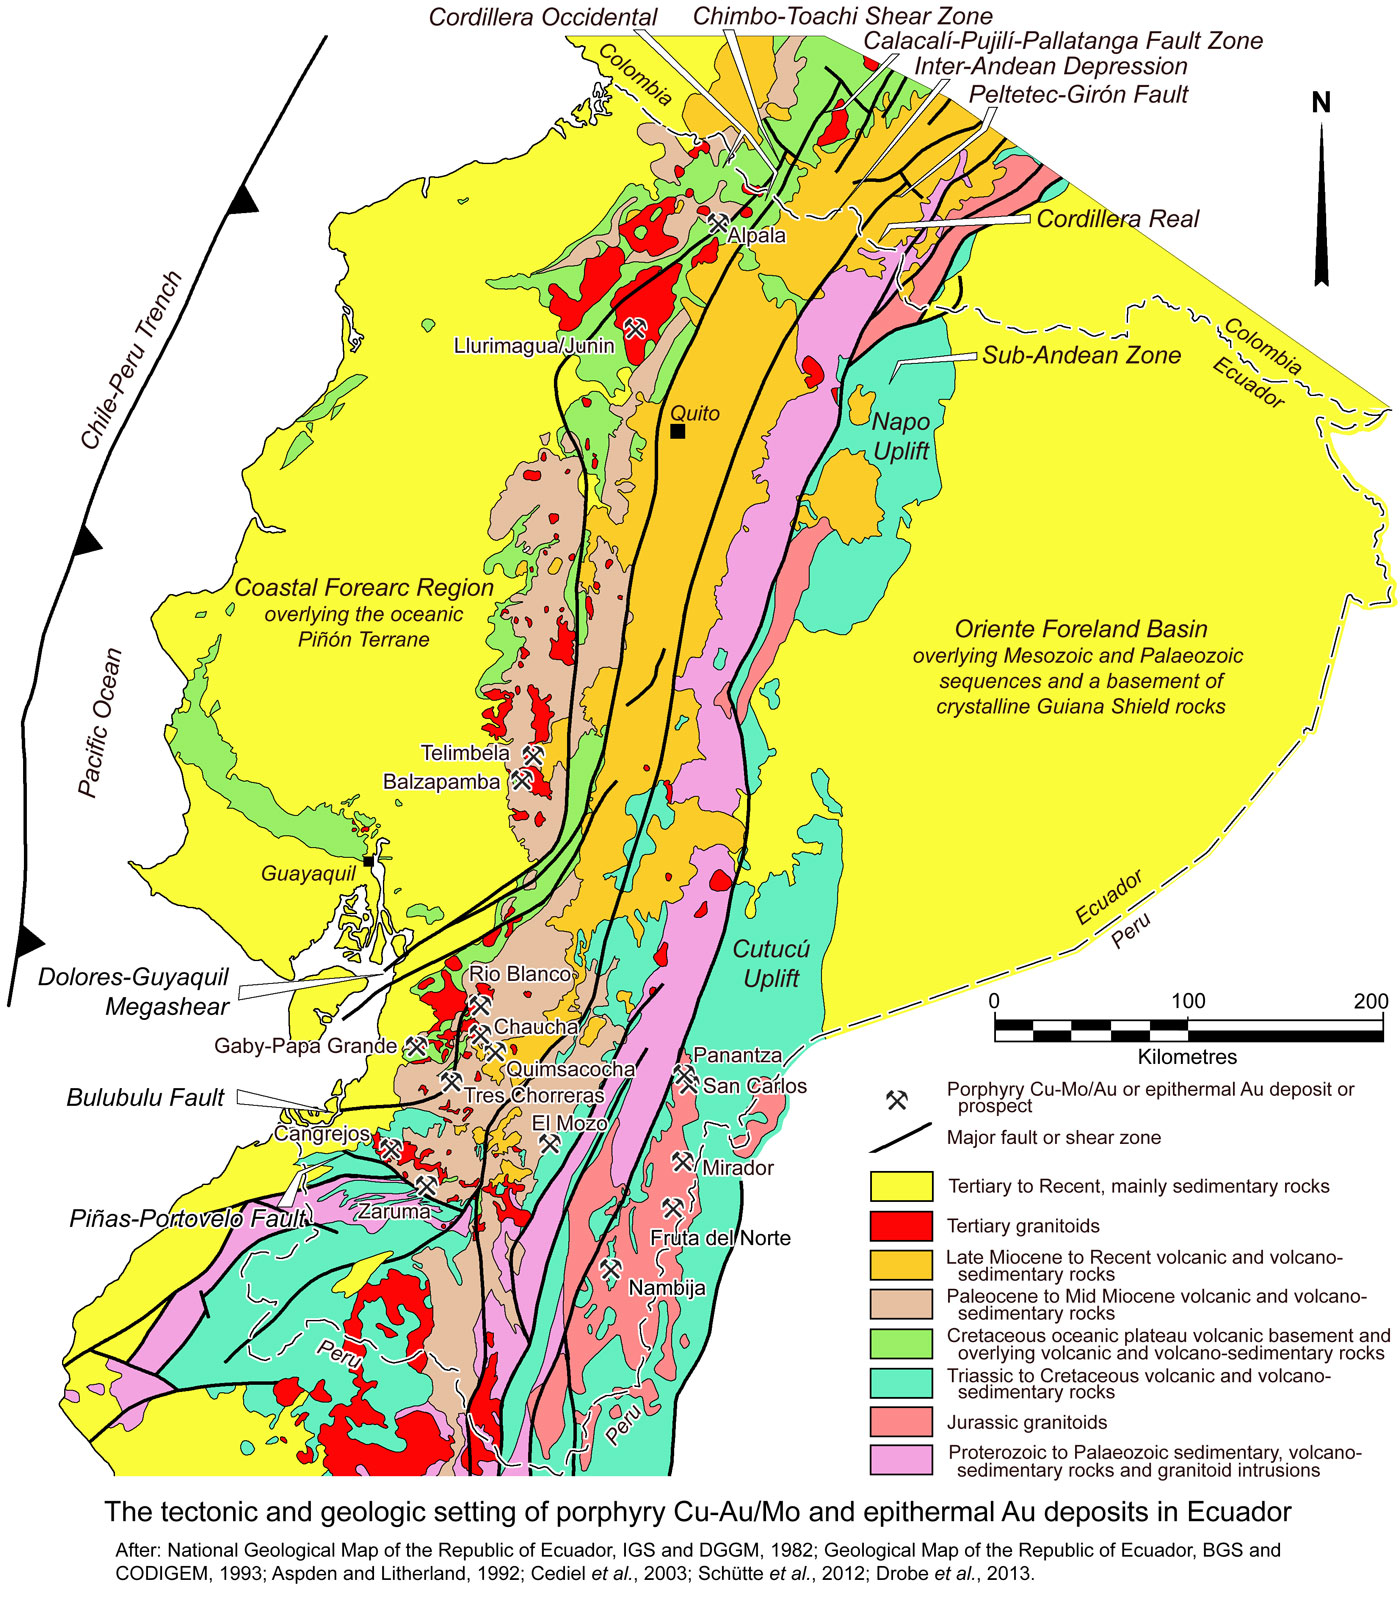 Ecuador geology and deposits